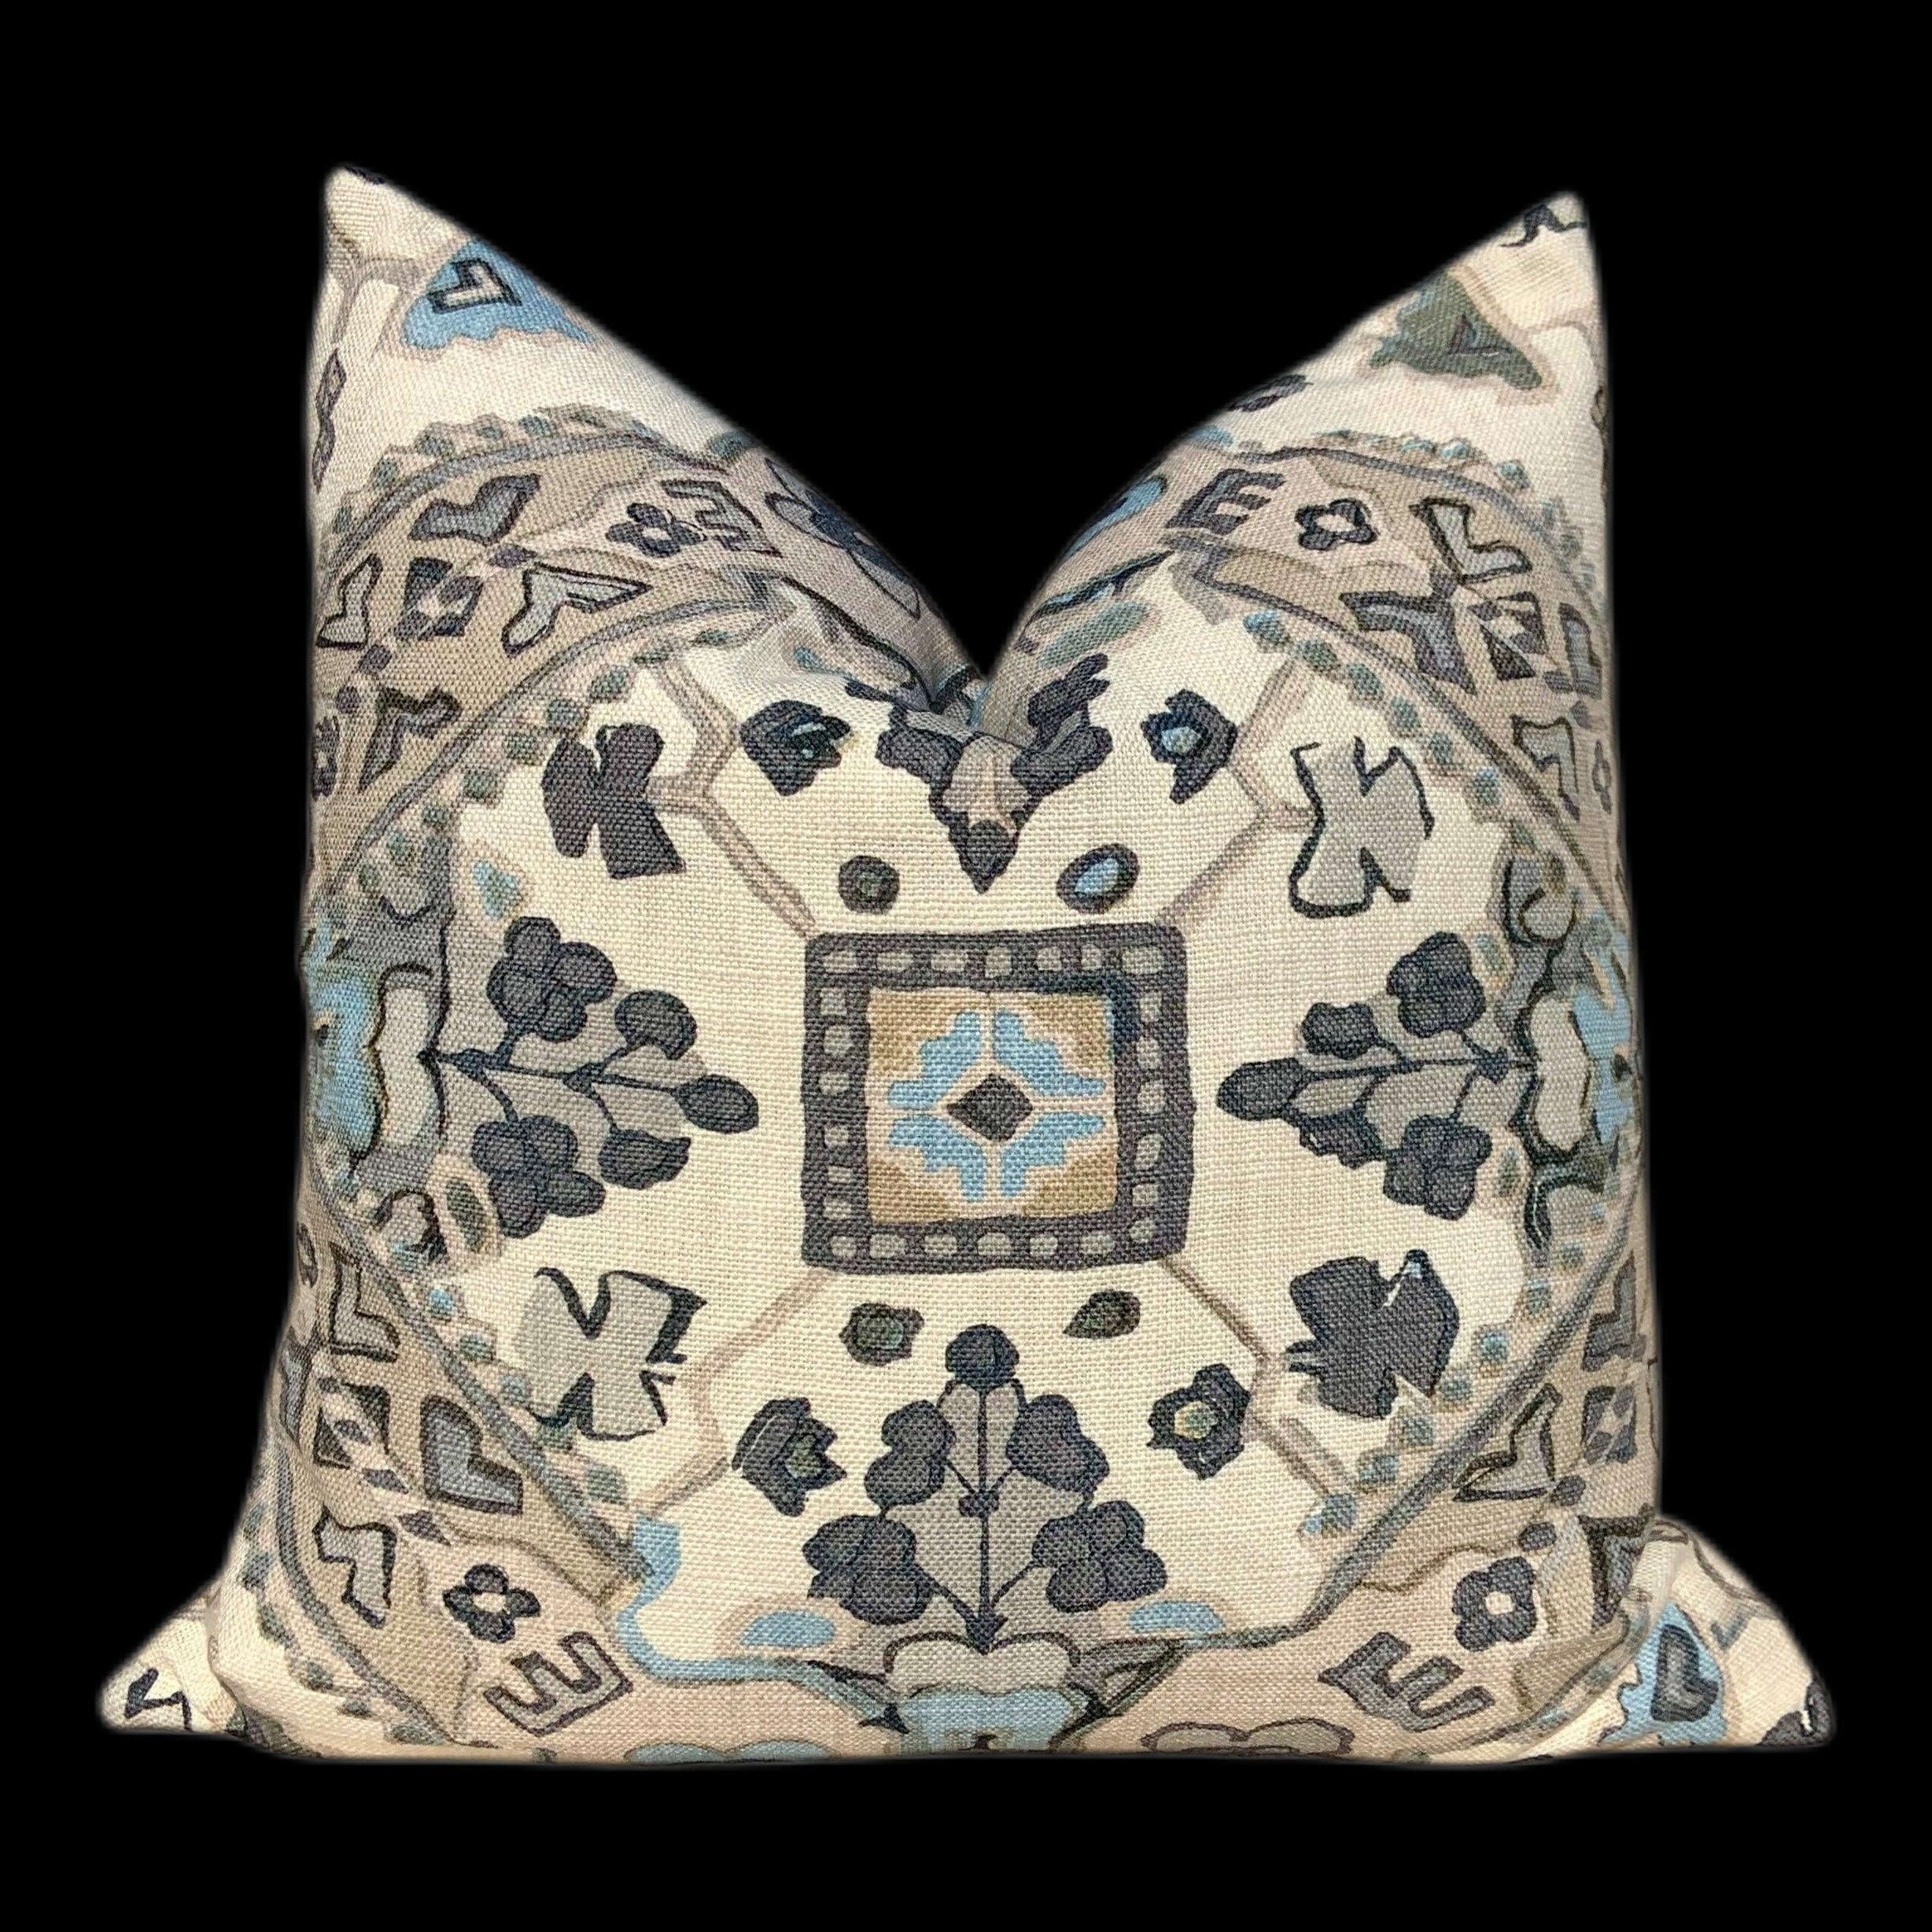 Thibaut Persian Pillow Gray, Beige. Long Lumbar Pillow // Medallion Gray Pillow // Boho Pillow Cover